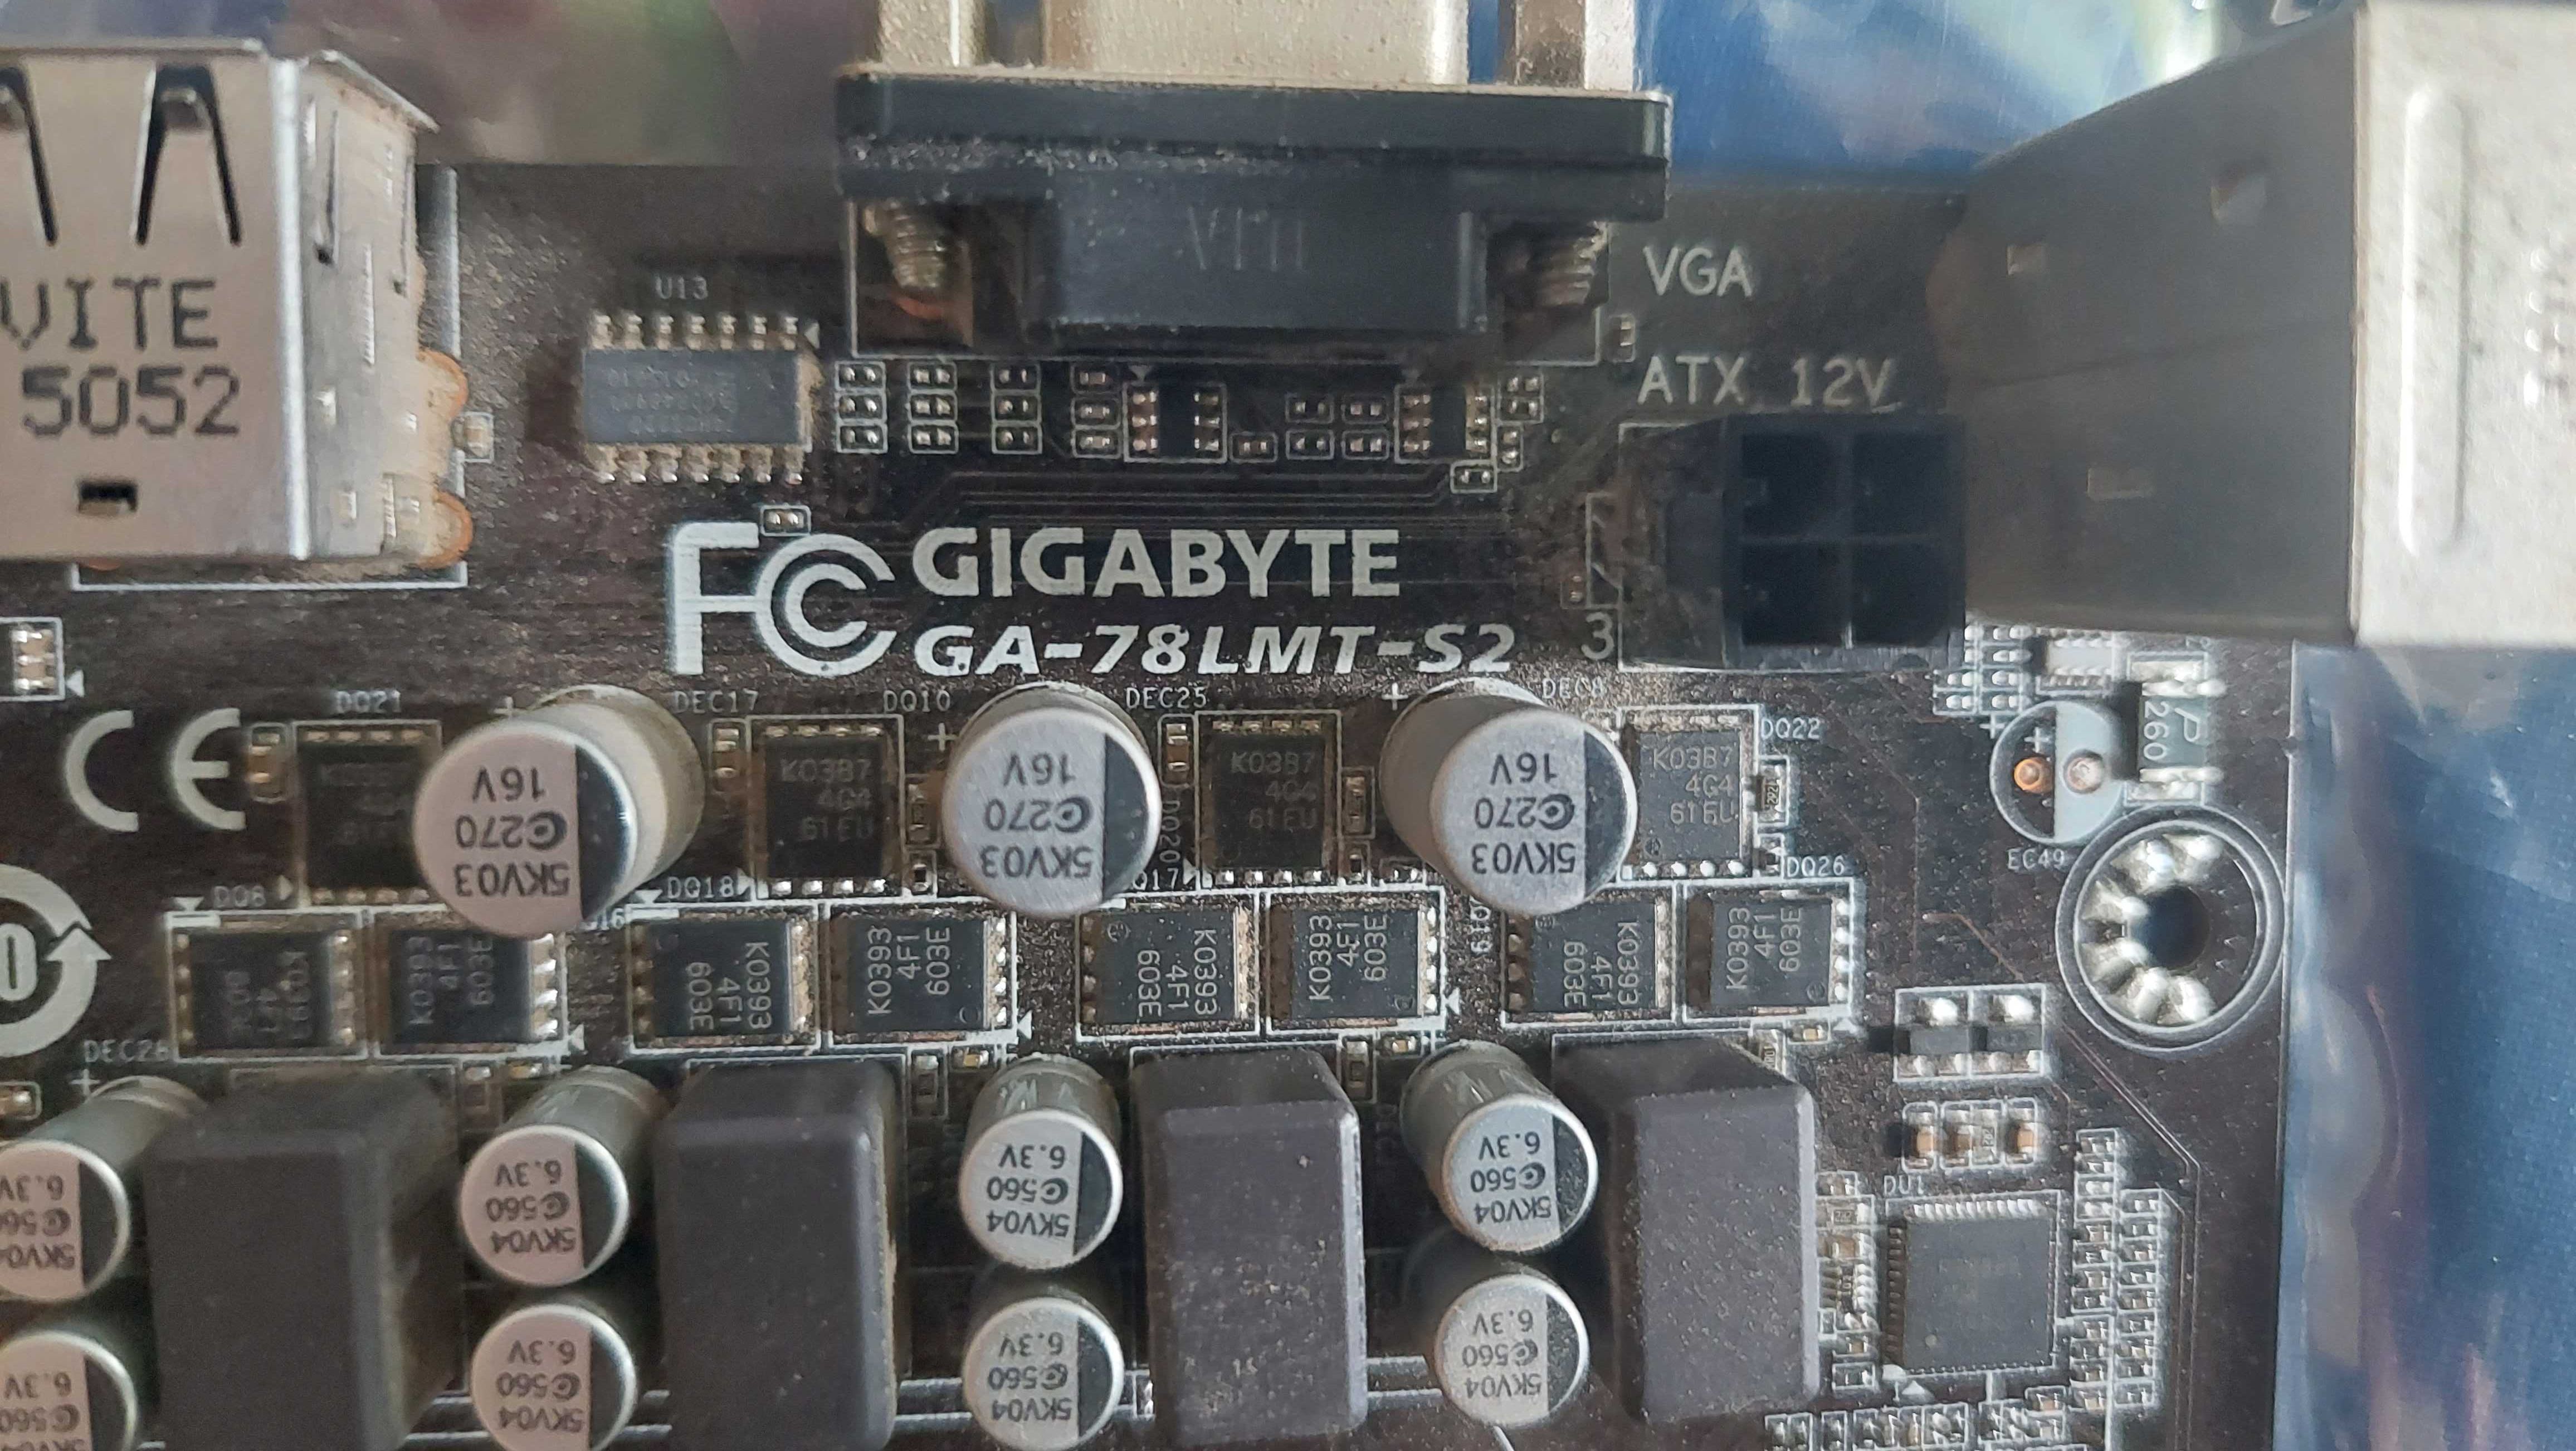 Комплект Gigabyte GA-78lmt - S2 + AMD FX-4100 + 8GB ОЗУ